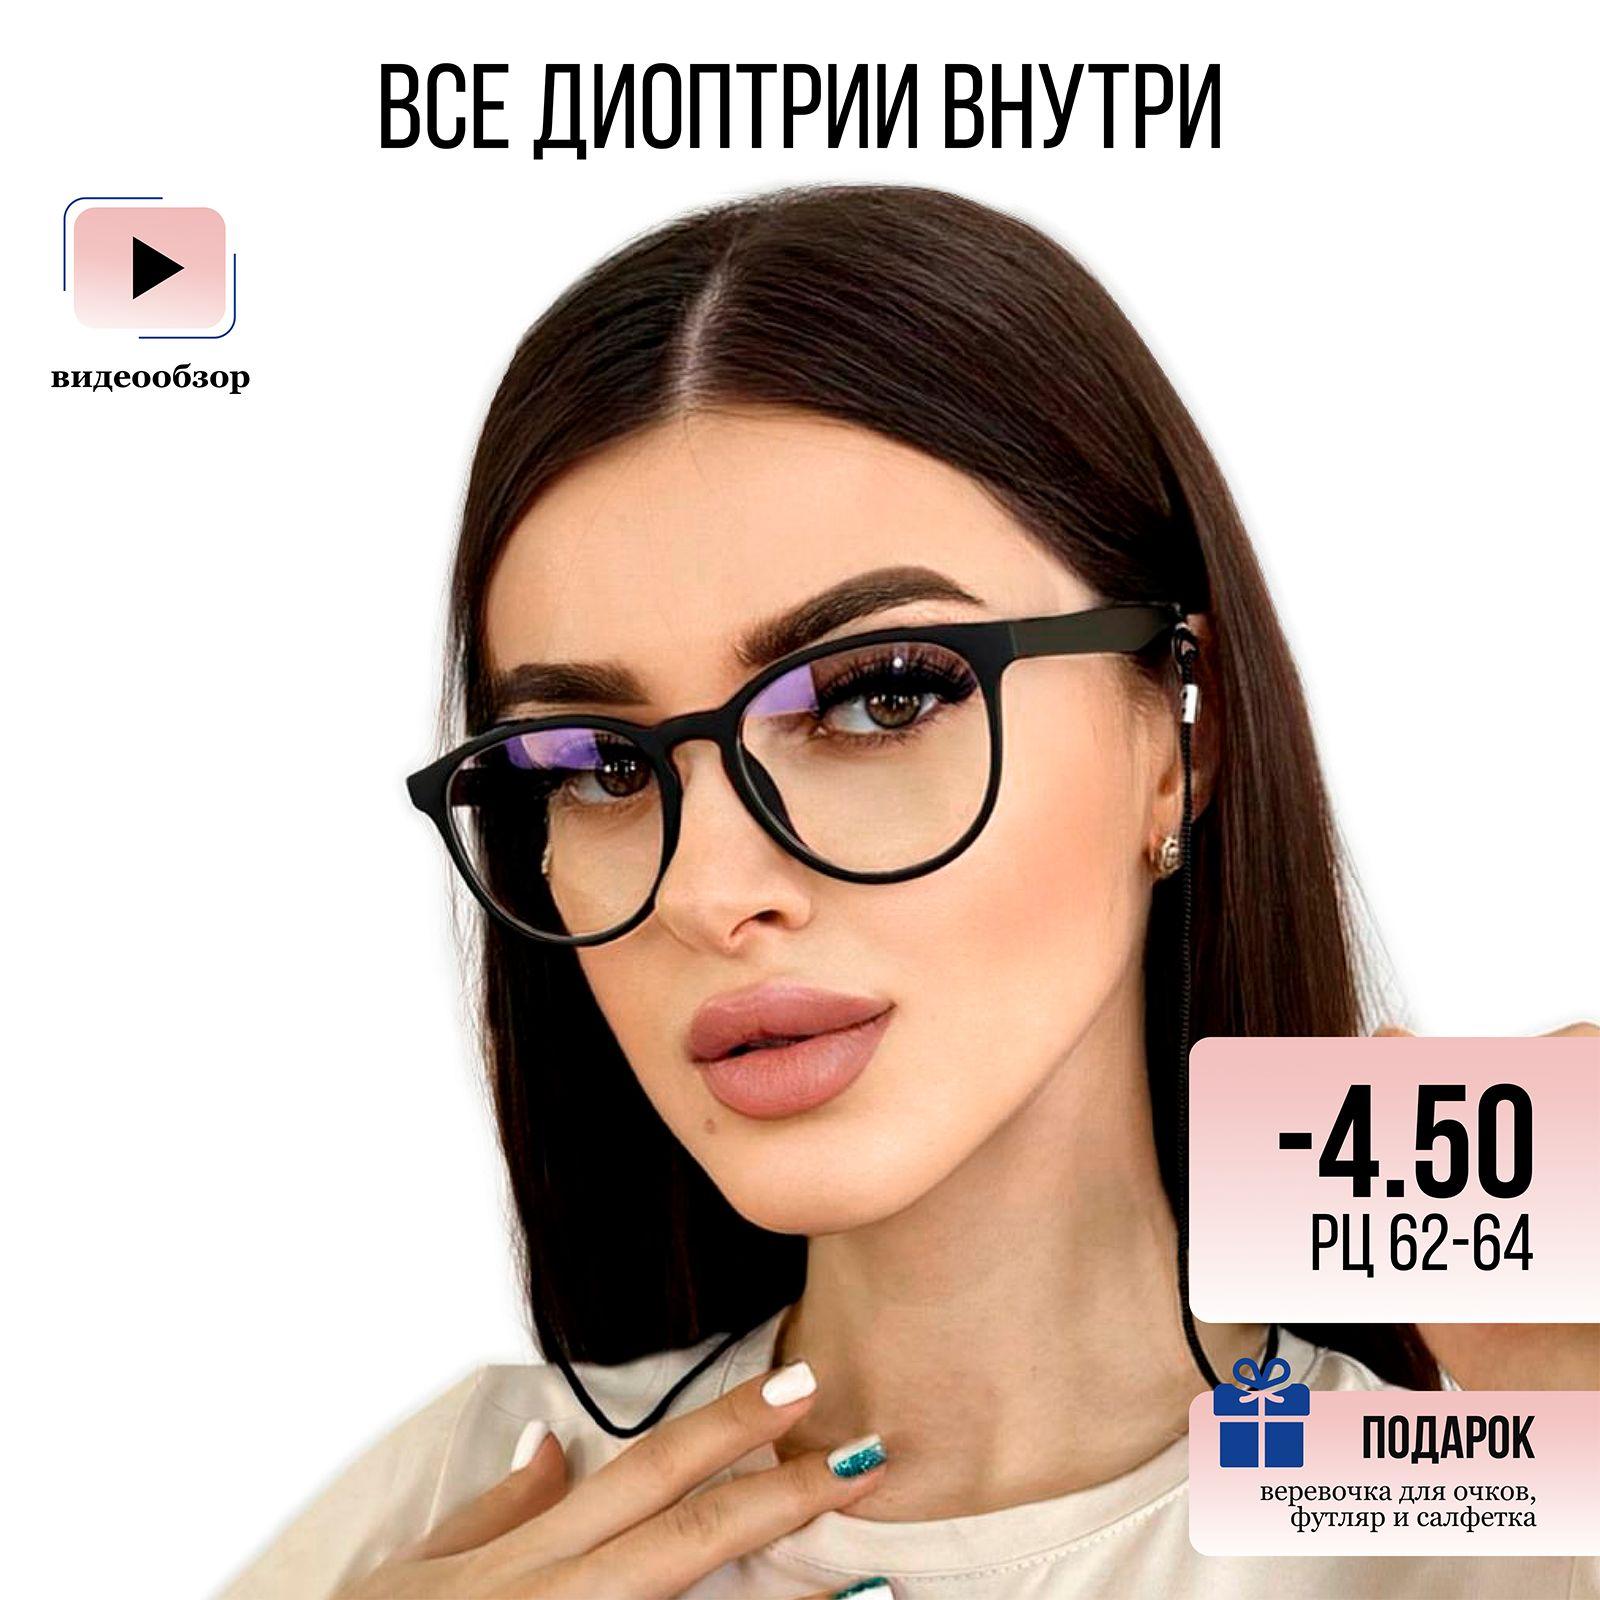 UltraGlass | Готовые женские очки для зрения - 4,5 , корригирующие очки для чтения с диоптриями